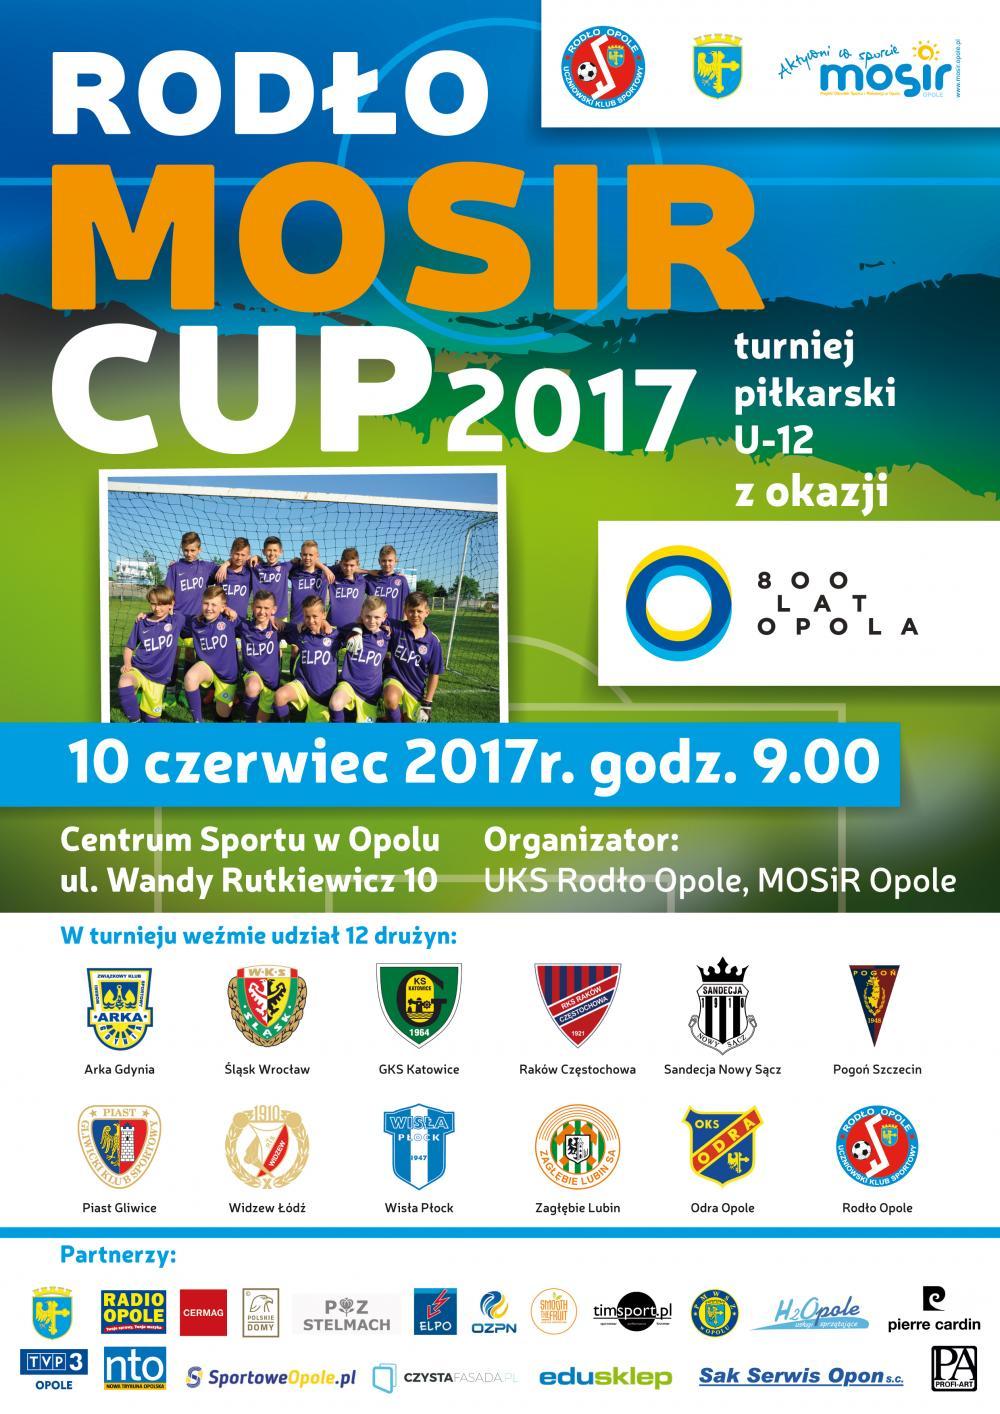 Plakat Rodło MOSiR Cup 2017 z okazji 800 lat Opola [materiały organizatora]